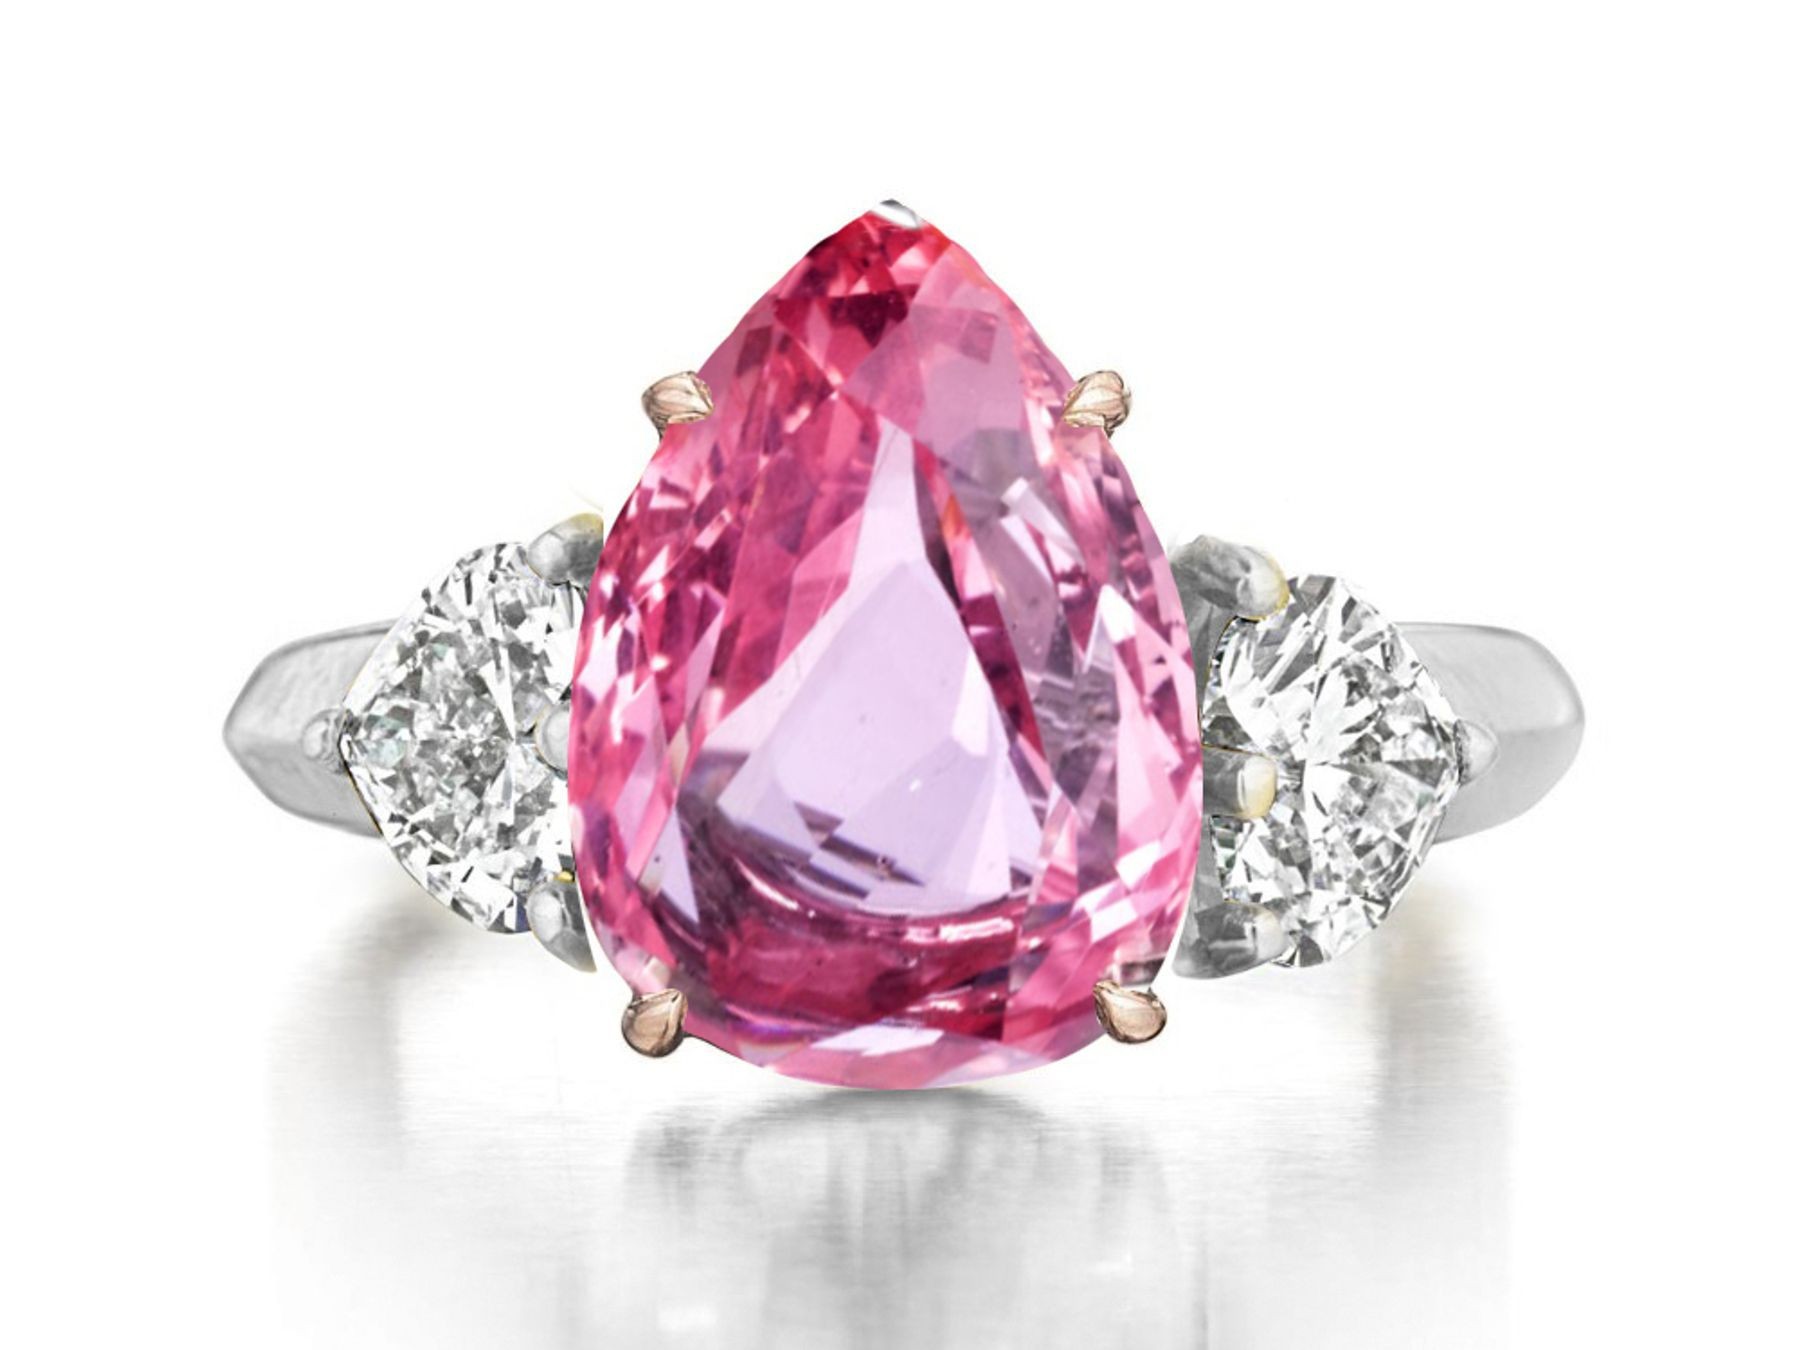 Premium Quality Unique Heart Shaped Diamonds & Pink Sapphire Pears Three Stone Rings